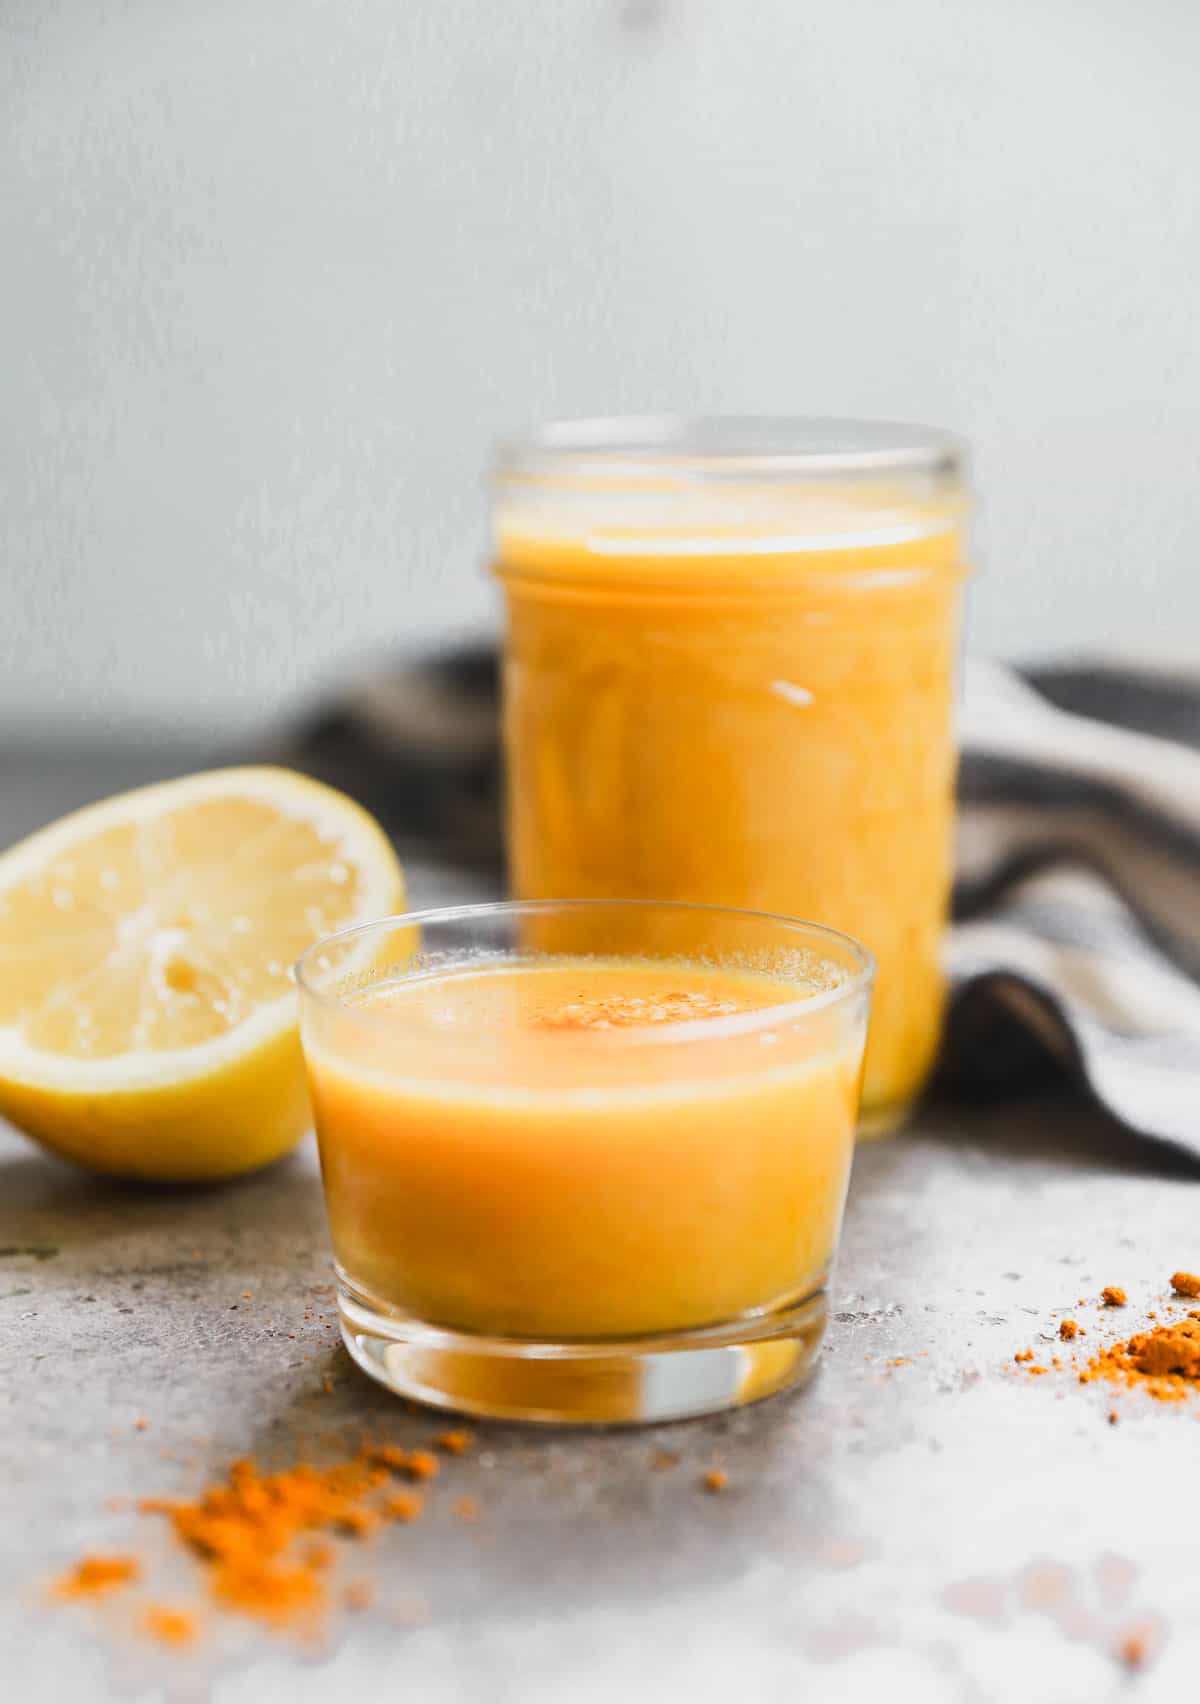 Lemon Ginger Shots recipe in a little glass, ready to enjoy.